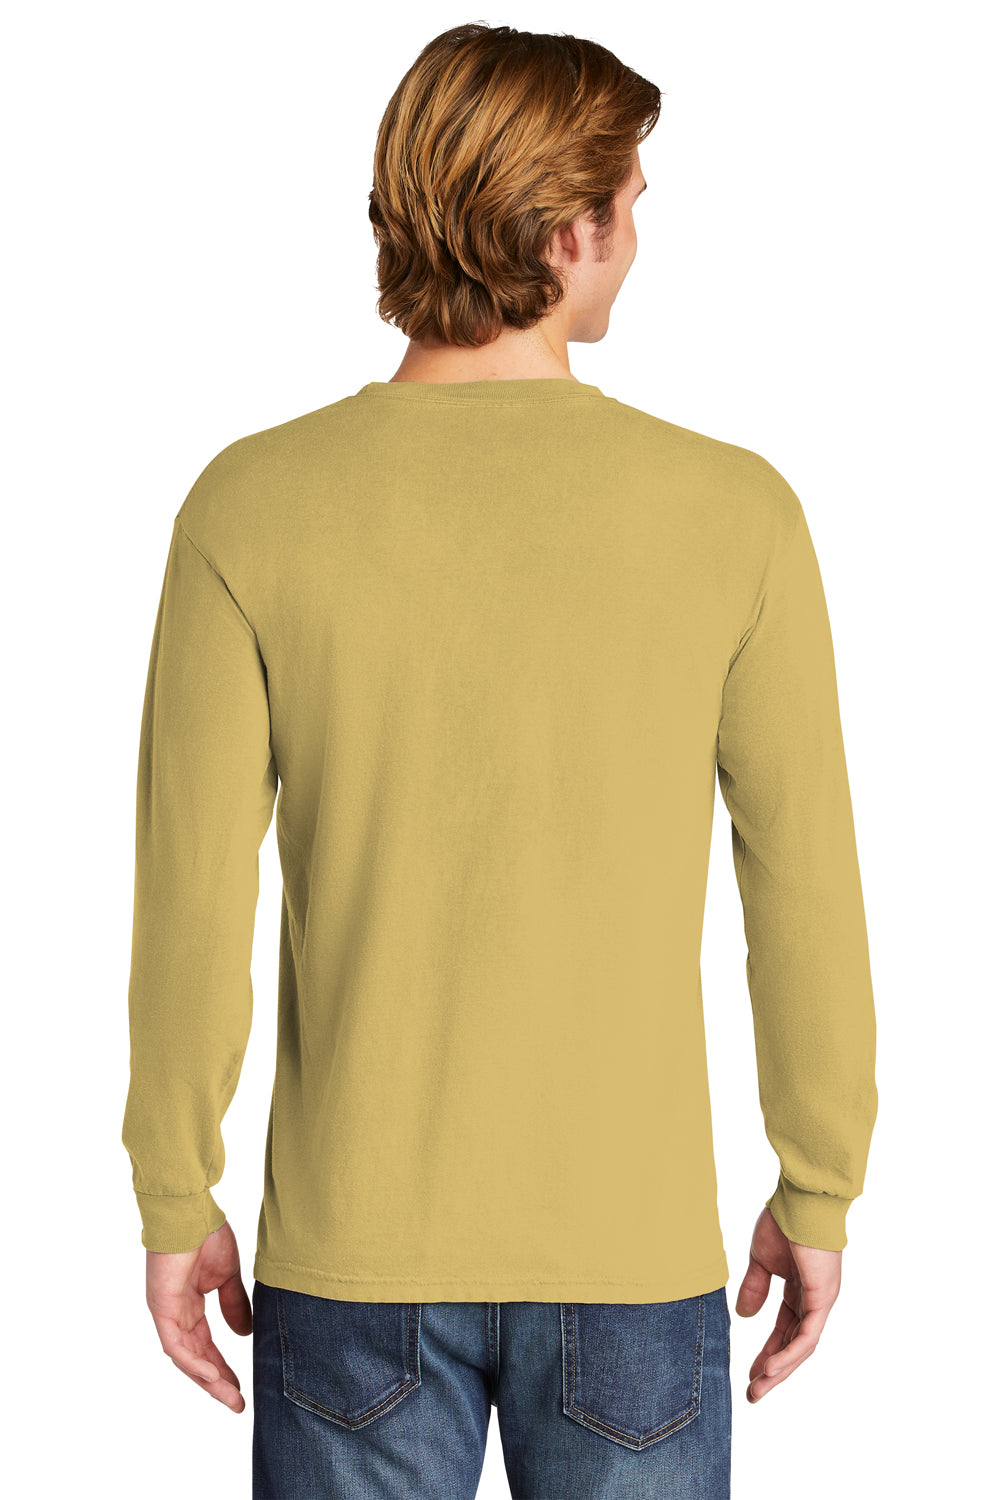 Comfort Colors 6014/C6014 Mens Long Sleeve Crewneck T-Shirt Mustard Yellow Back